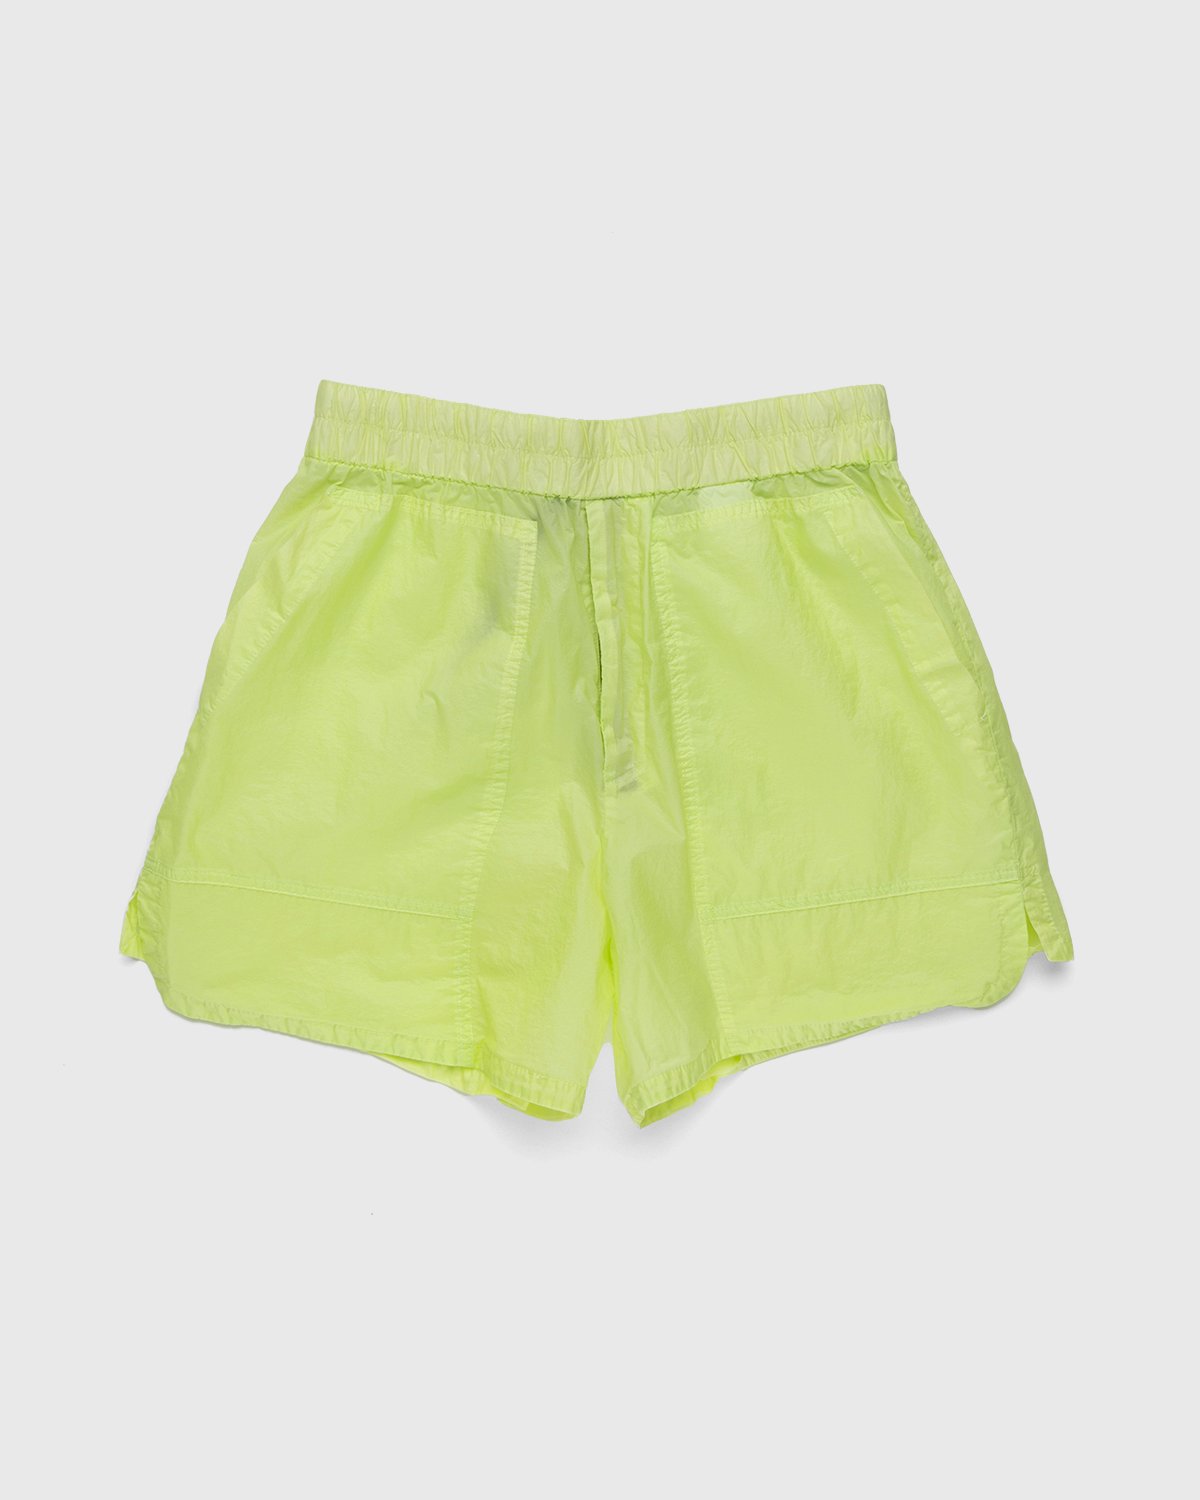 Dries van Noten - Pooles Shorts Lime - Clothing - Green - Image 1